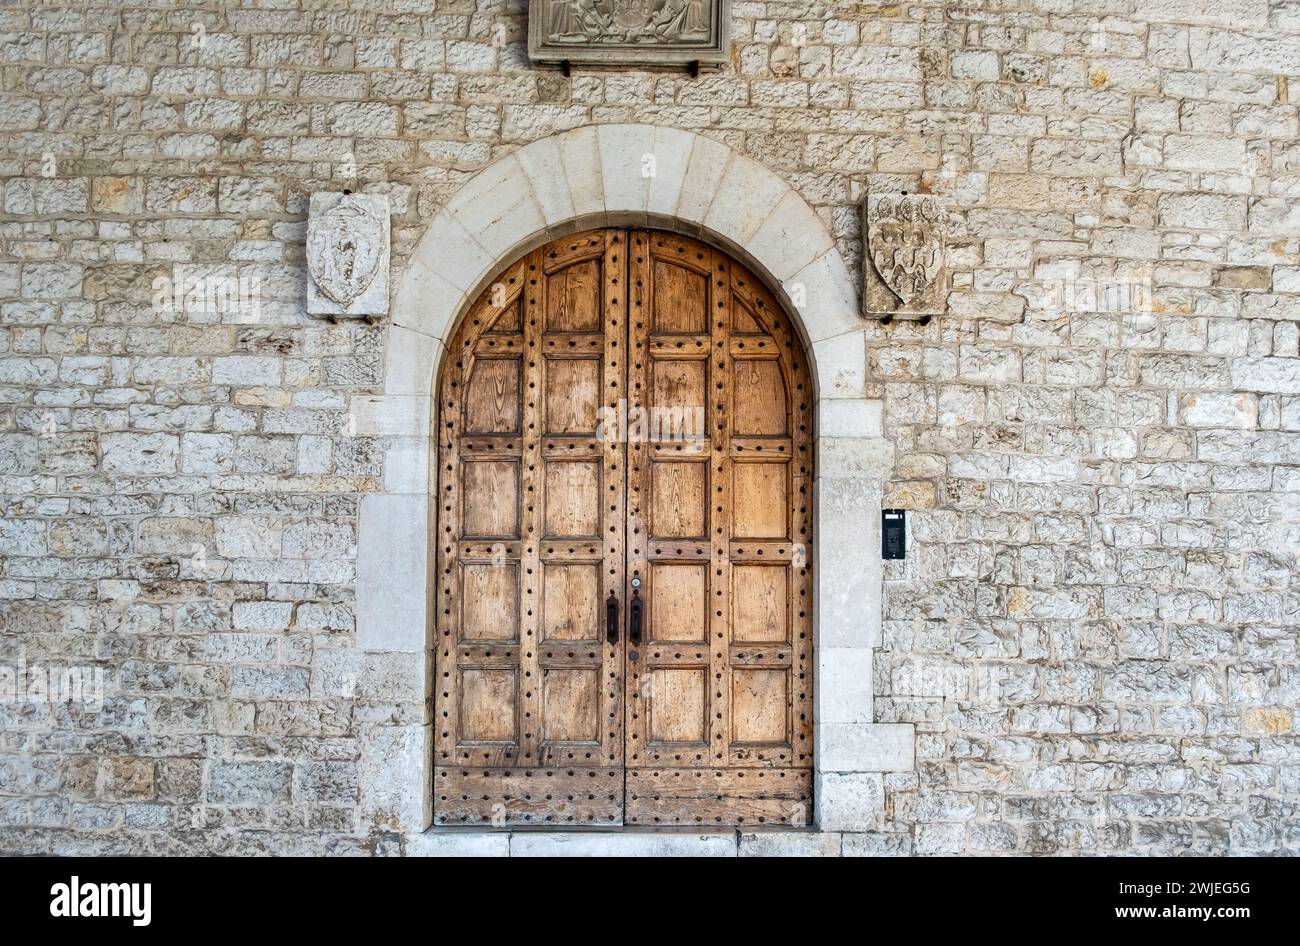 detail of the portal of the Saint Nicholas Basilica in the historic centre of Bari, Puglia region (Apulia), southern Italy, Europe Stock Photo